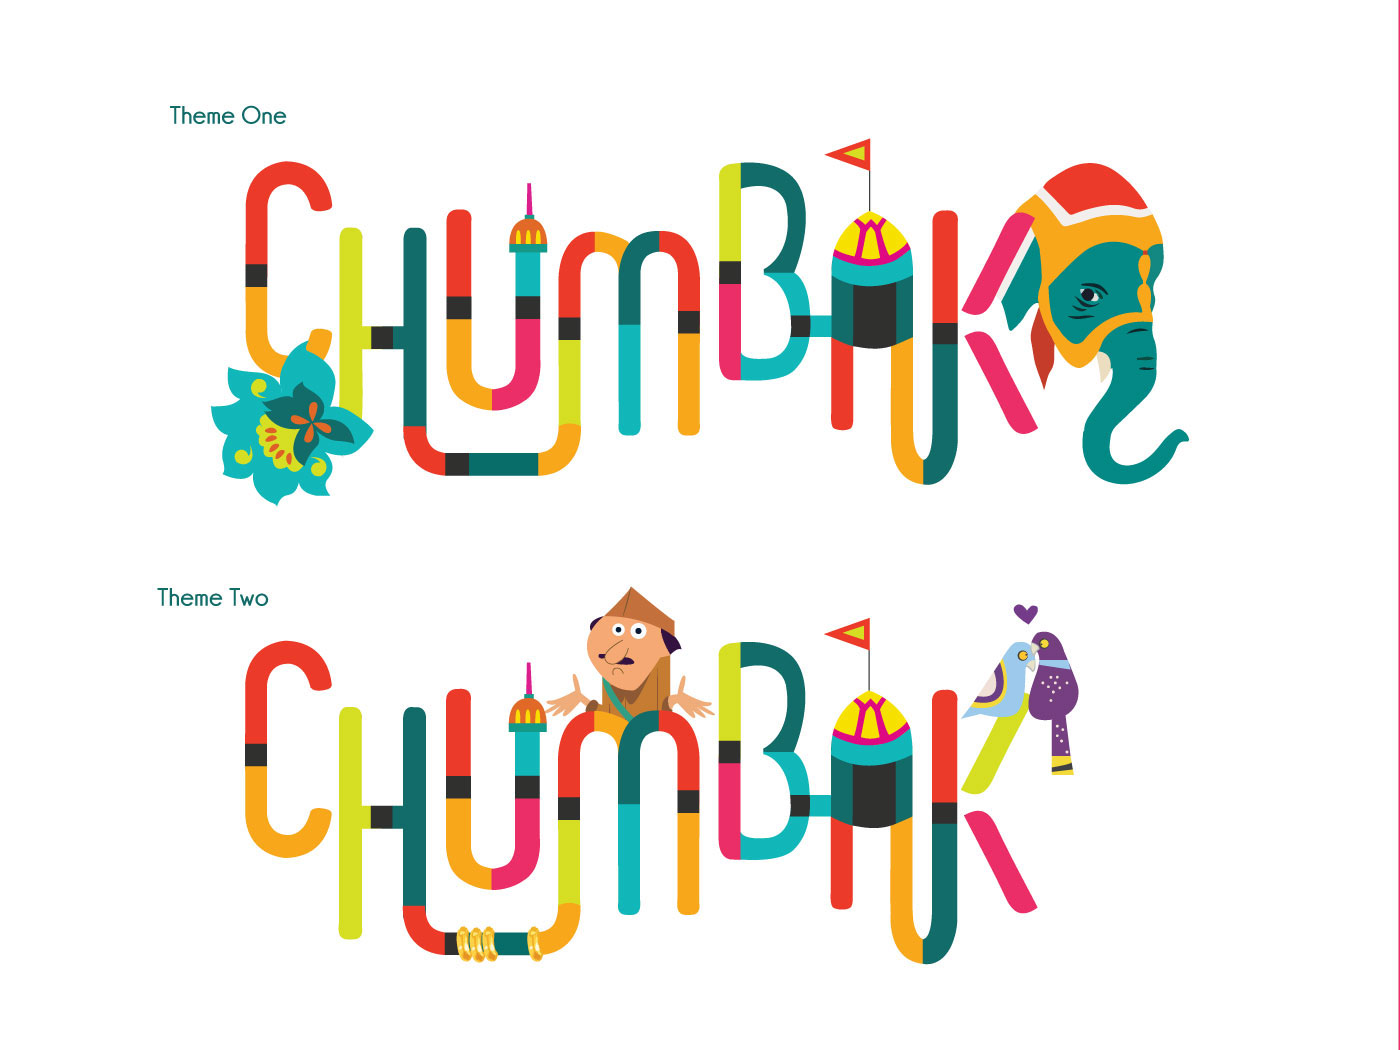 #Branding #identity redesign #chumbak #quirky #graphic design #illustration